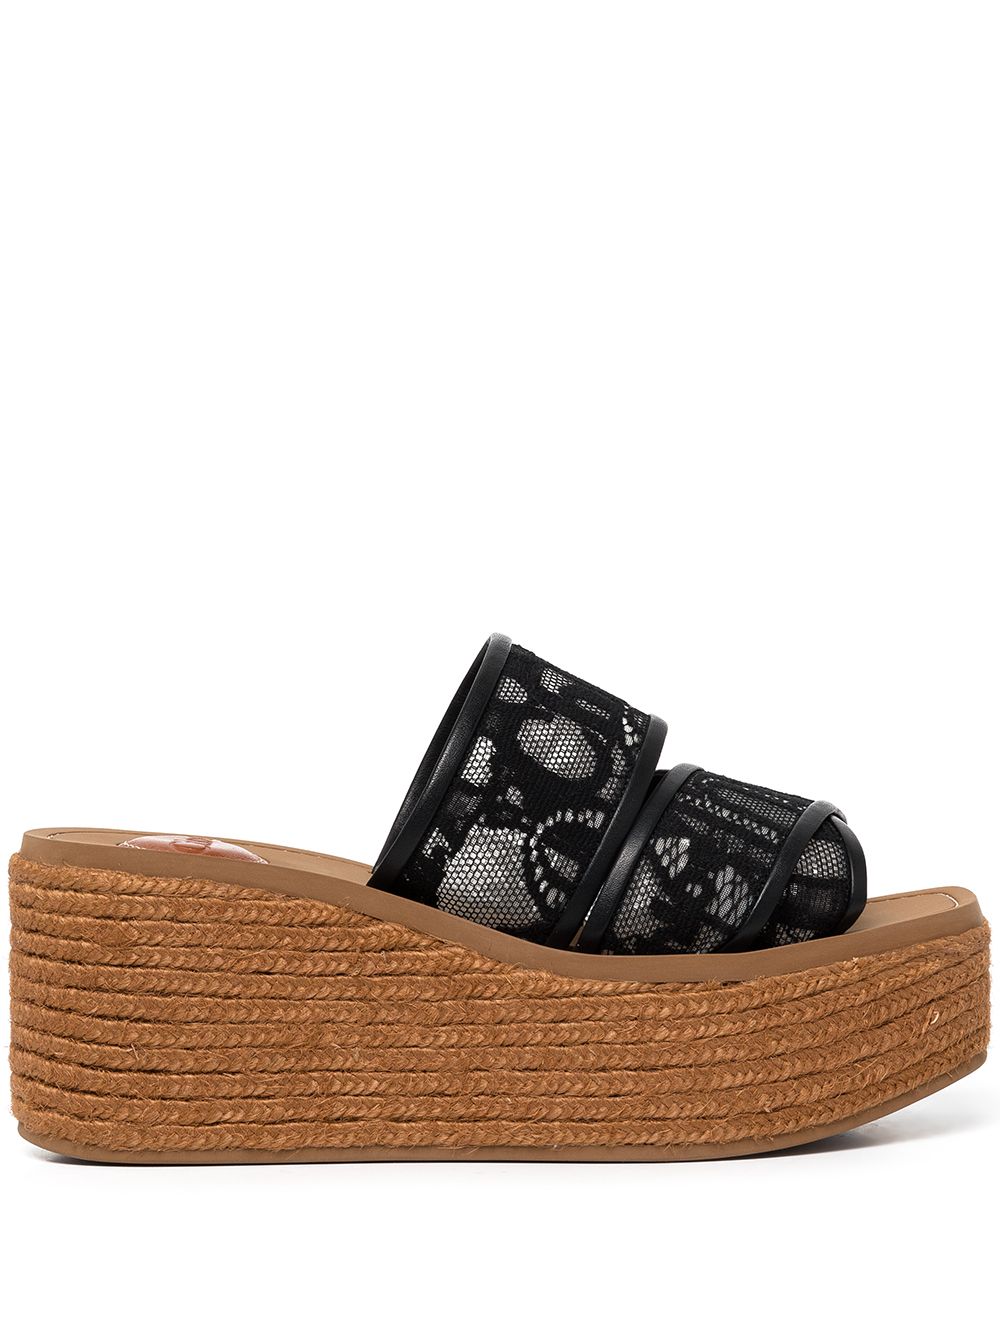 Woody double-strap platform sandals